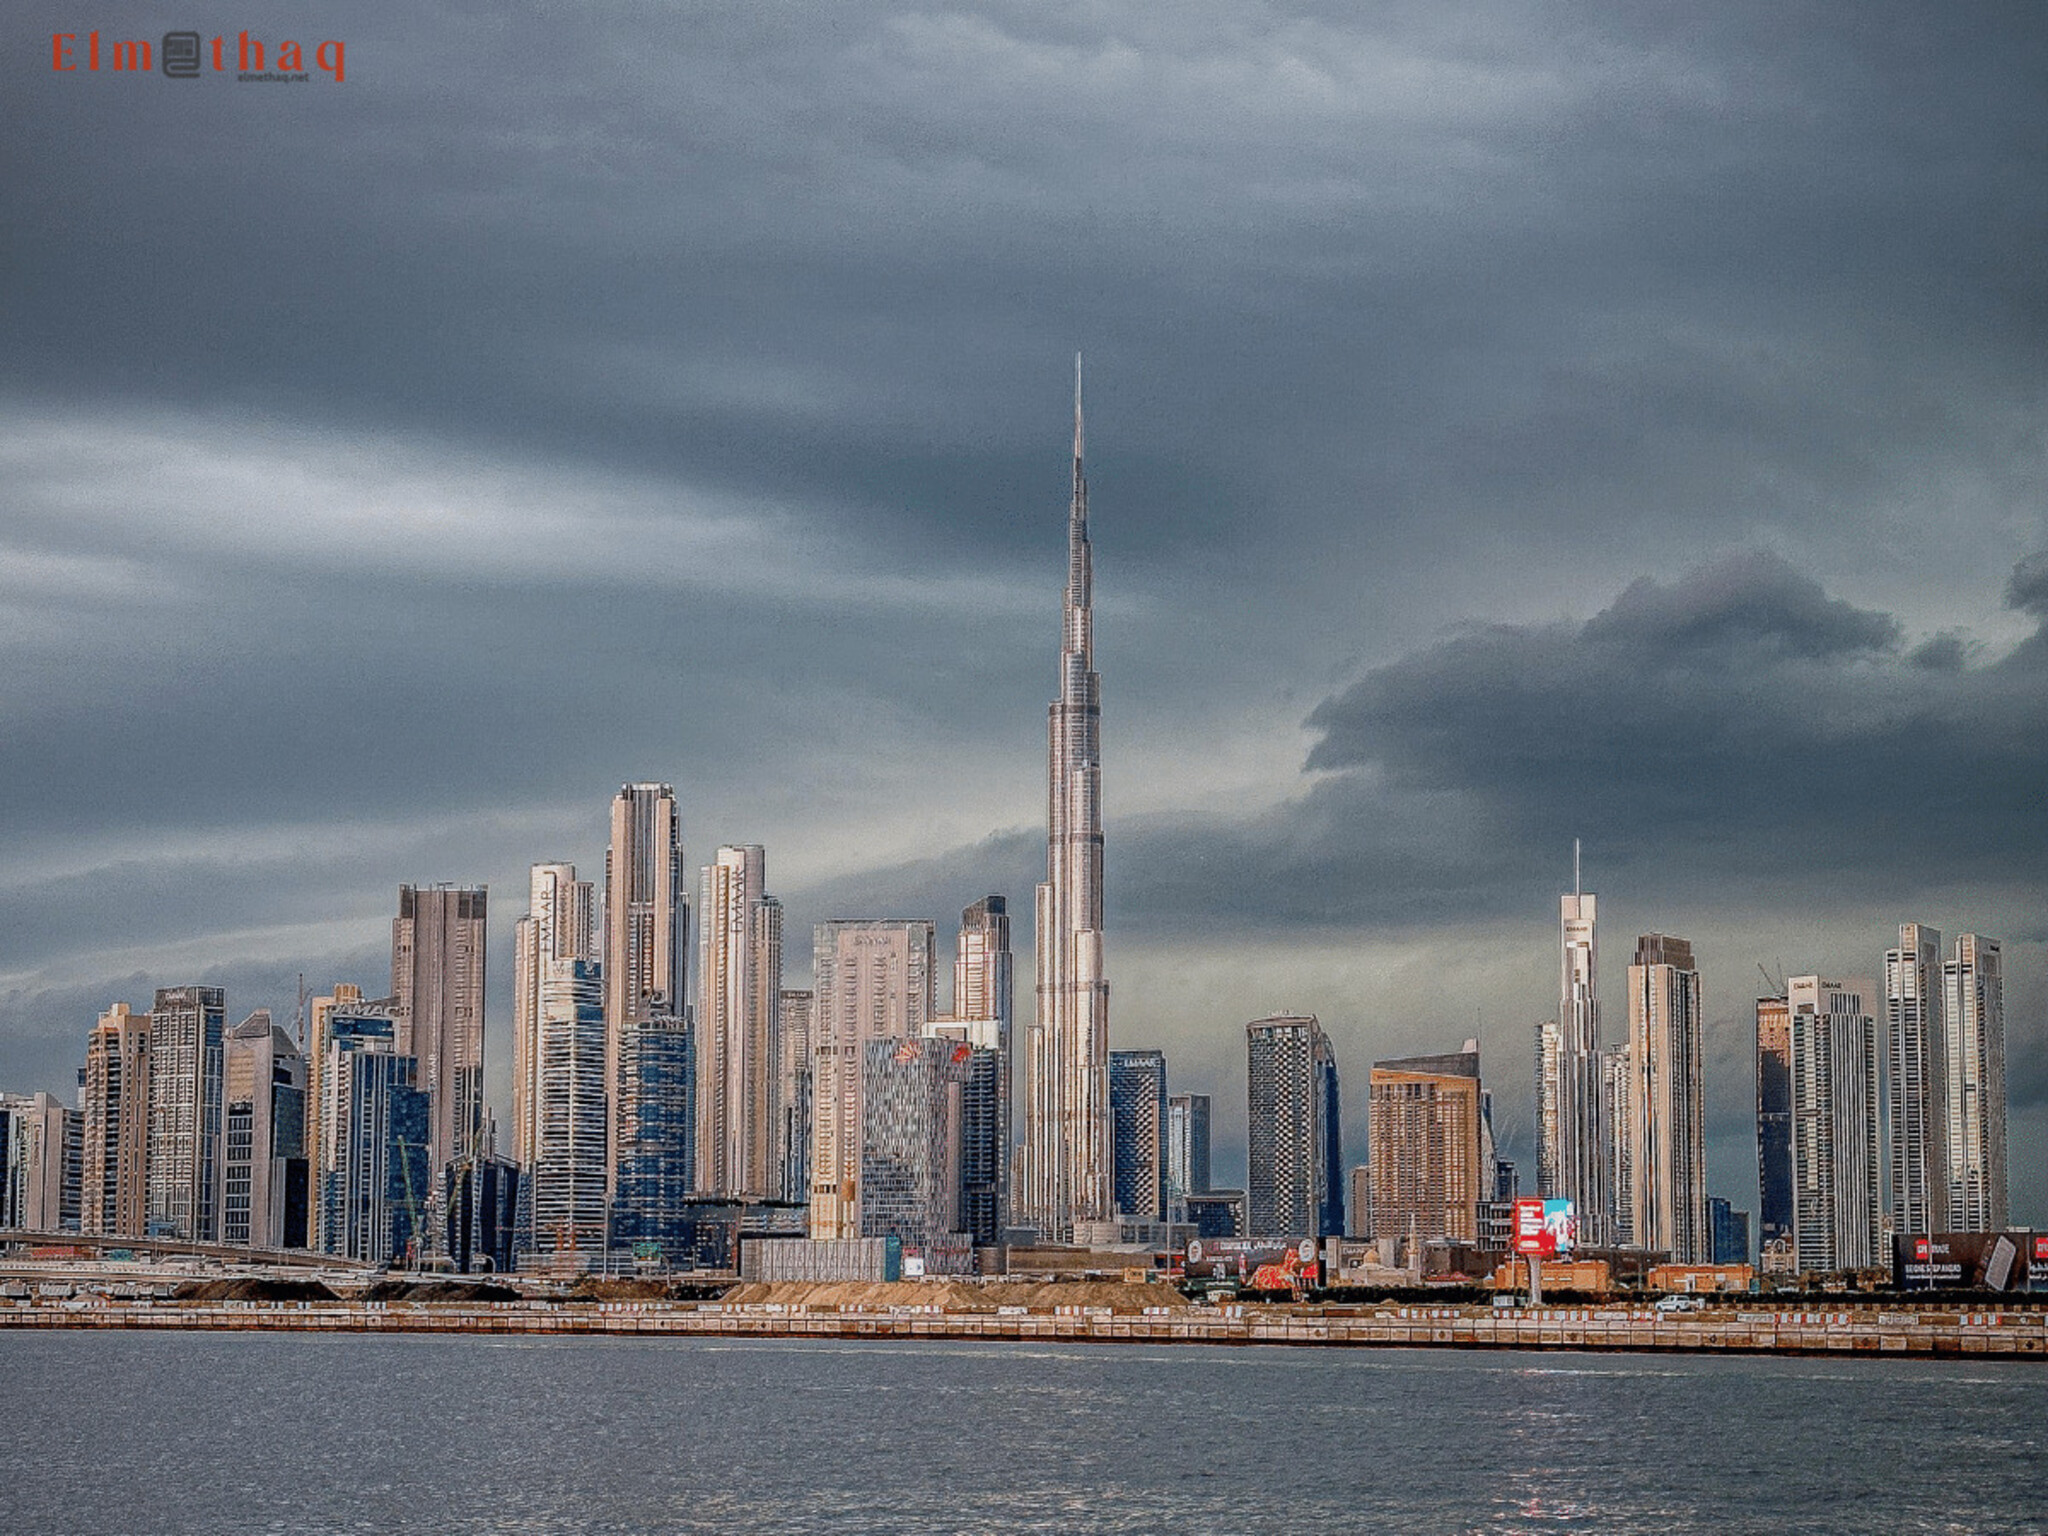 UAE Weather: Meteorology Forecasts Increasing Rain Chances as June Progresses